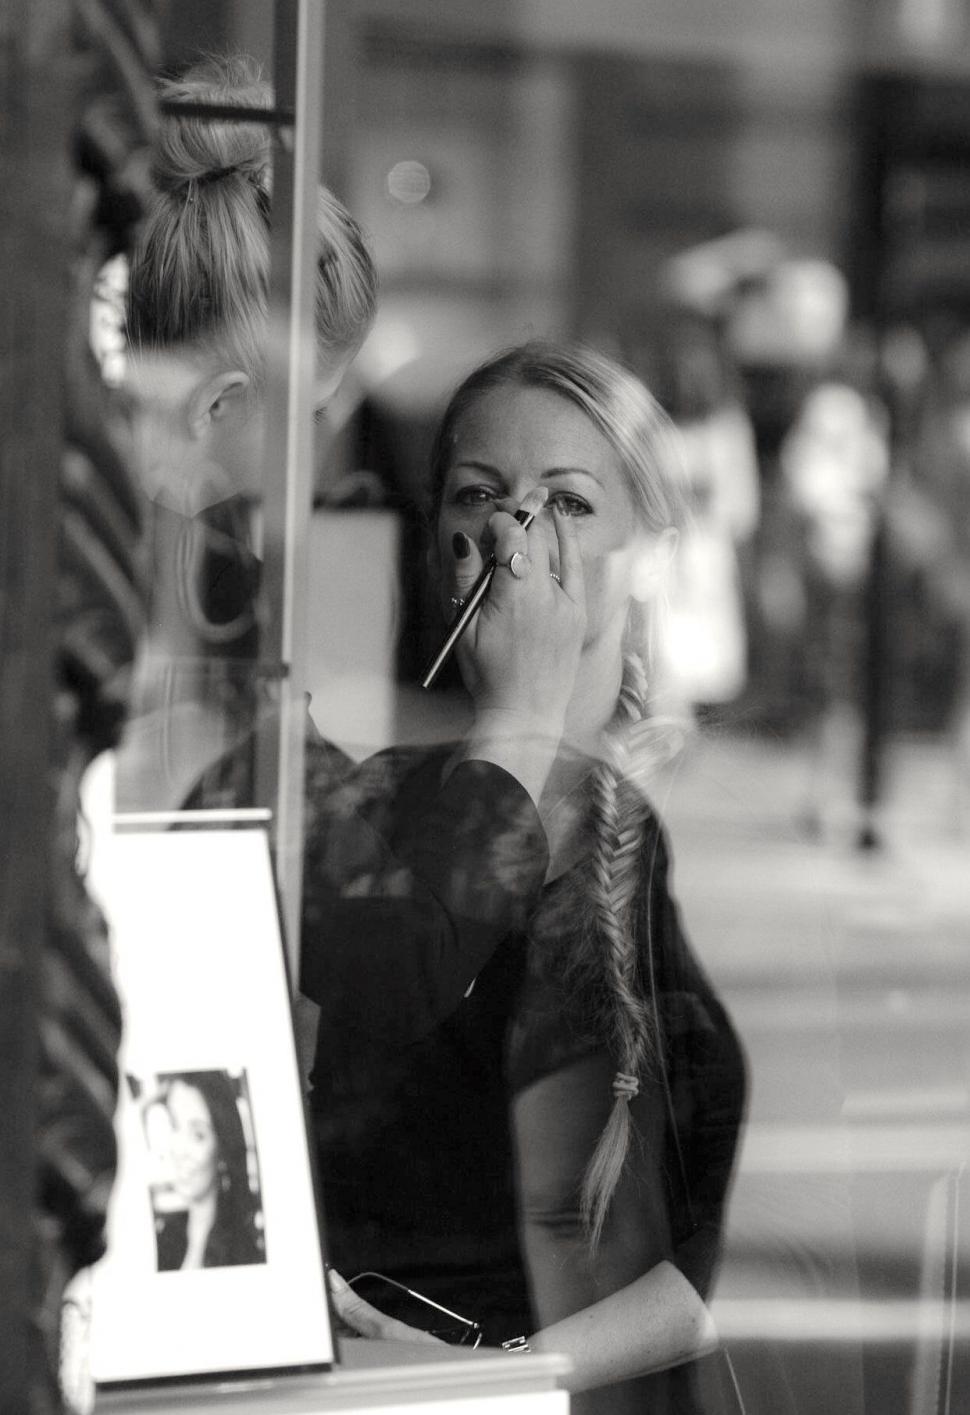 Free Image of Woman Smoking a Cigarette 